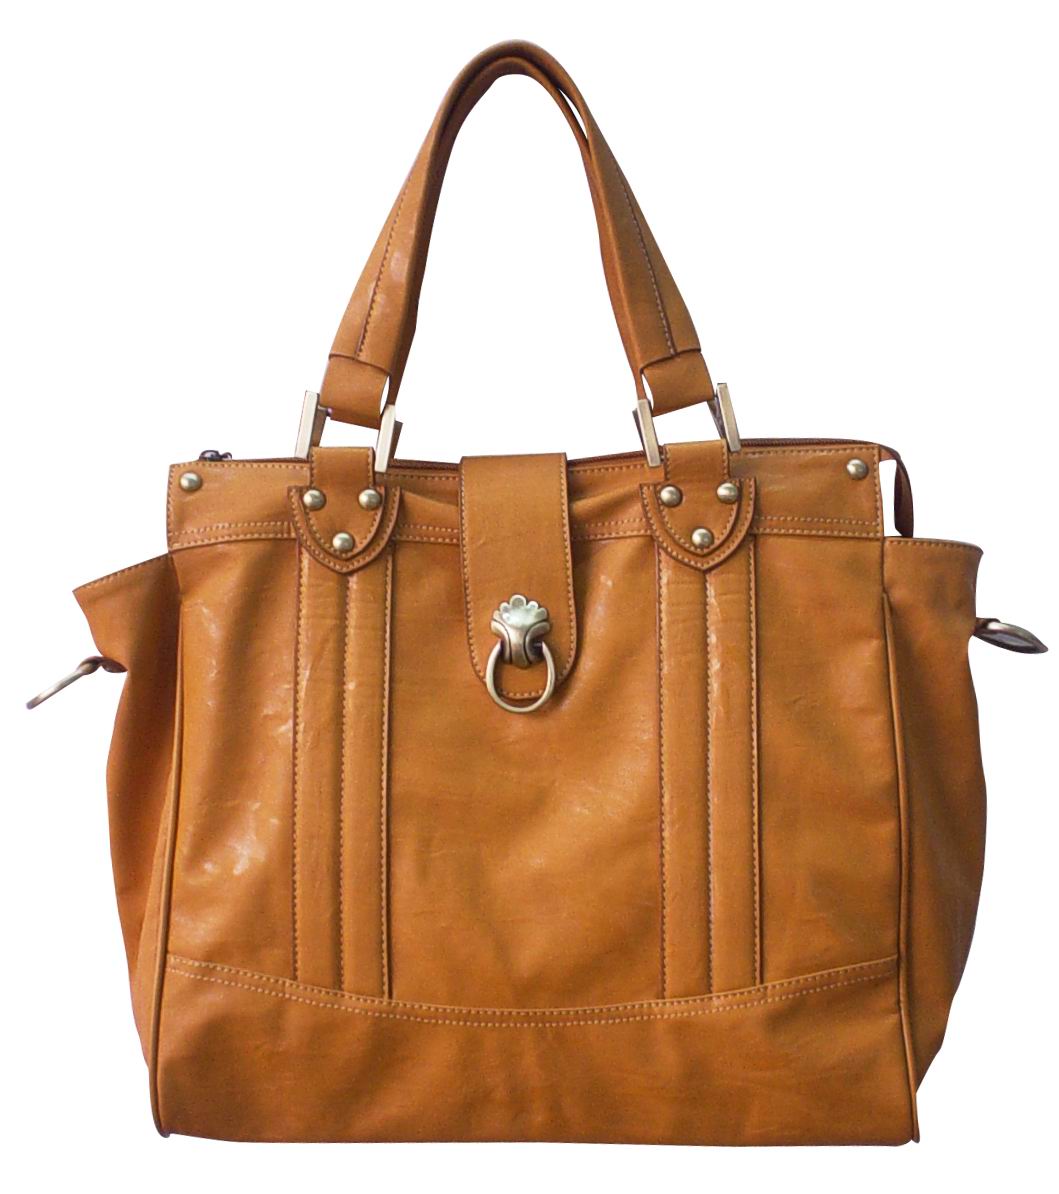 Fashional  handbag made of PU leather